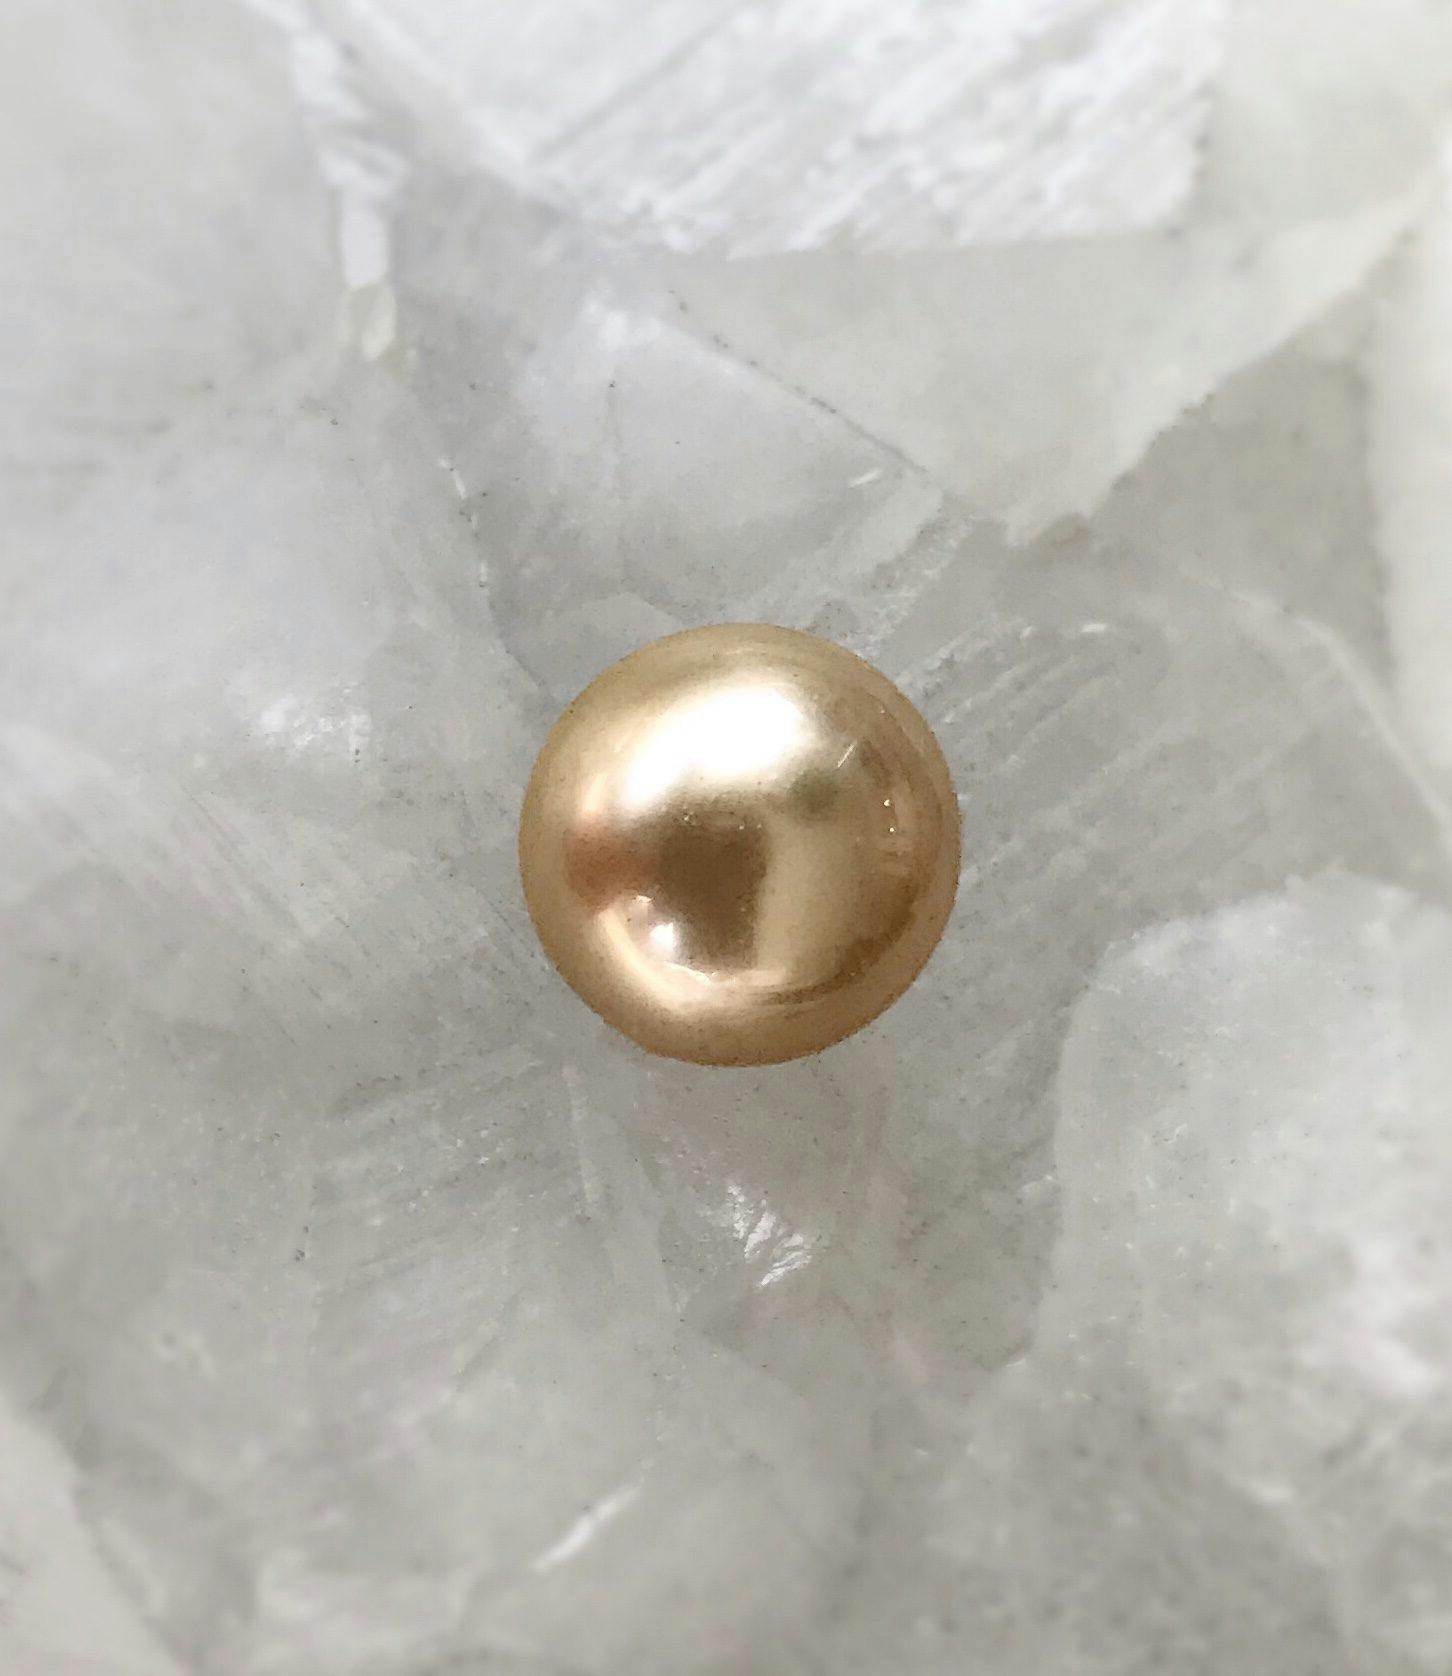 Golden South Sea pearl - pearl symbolism